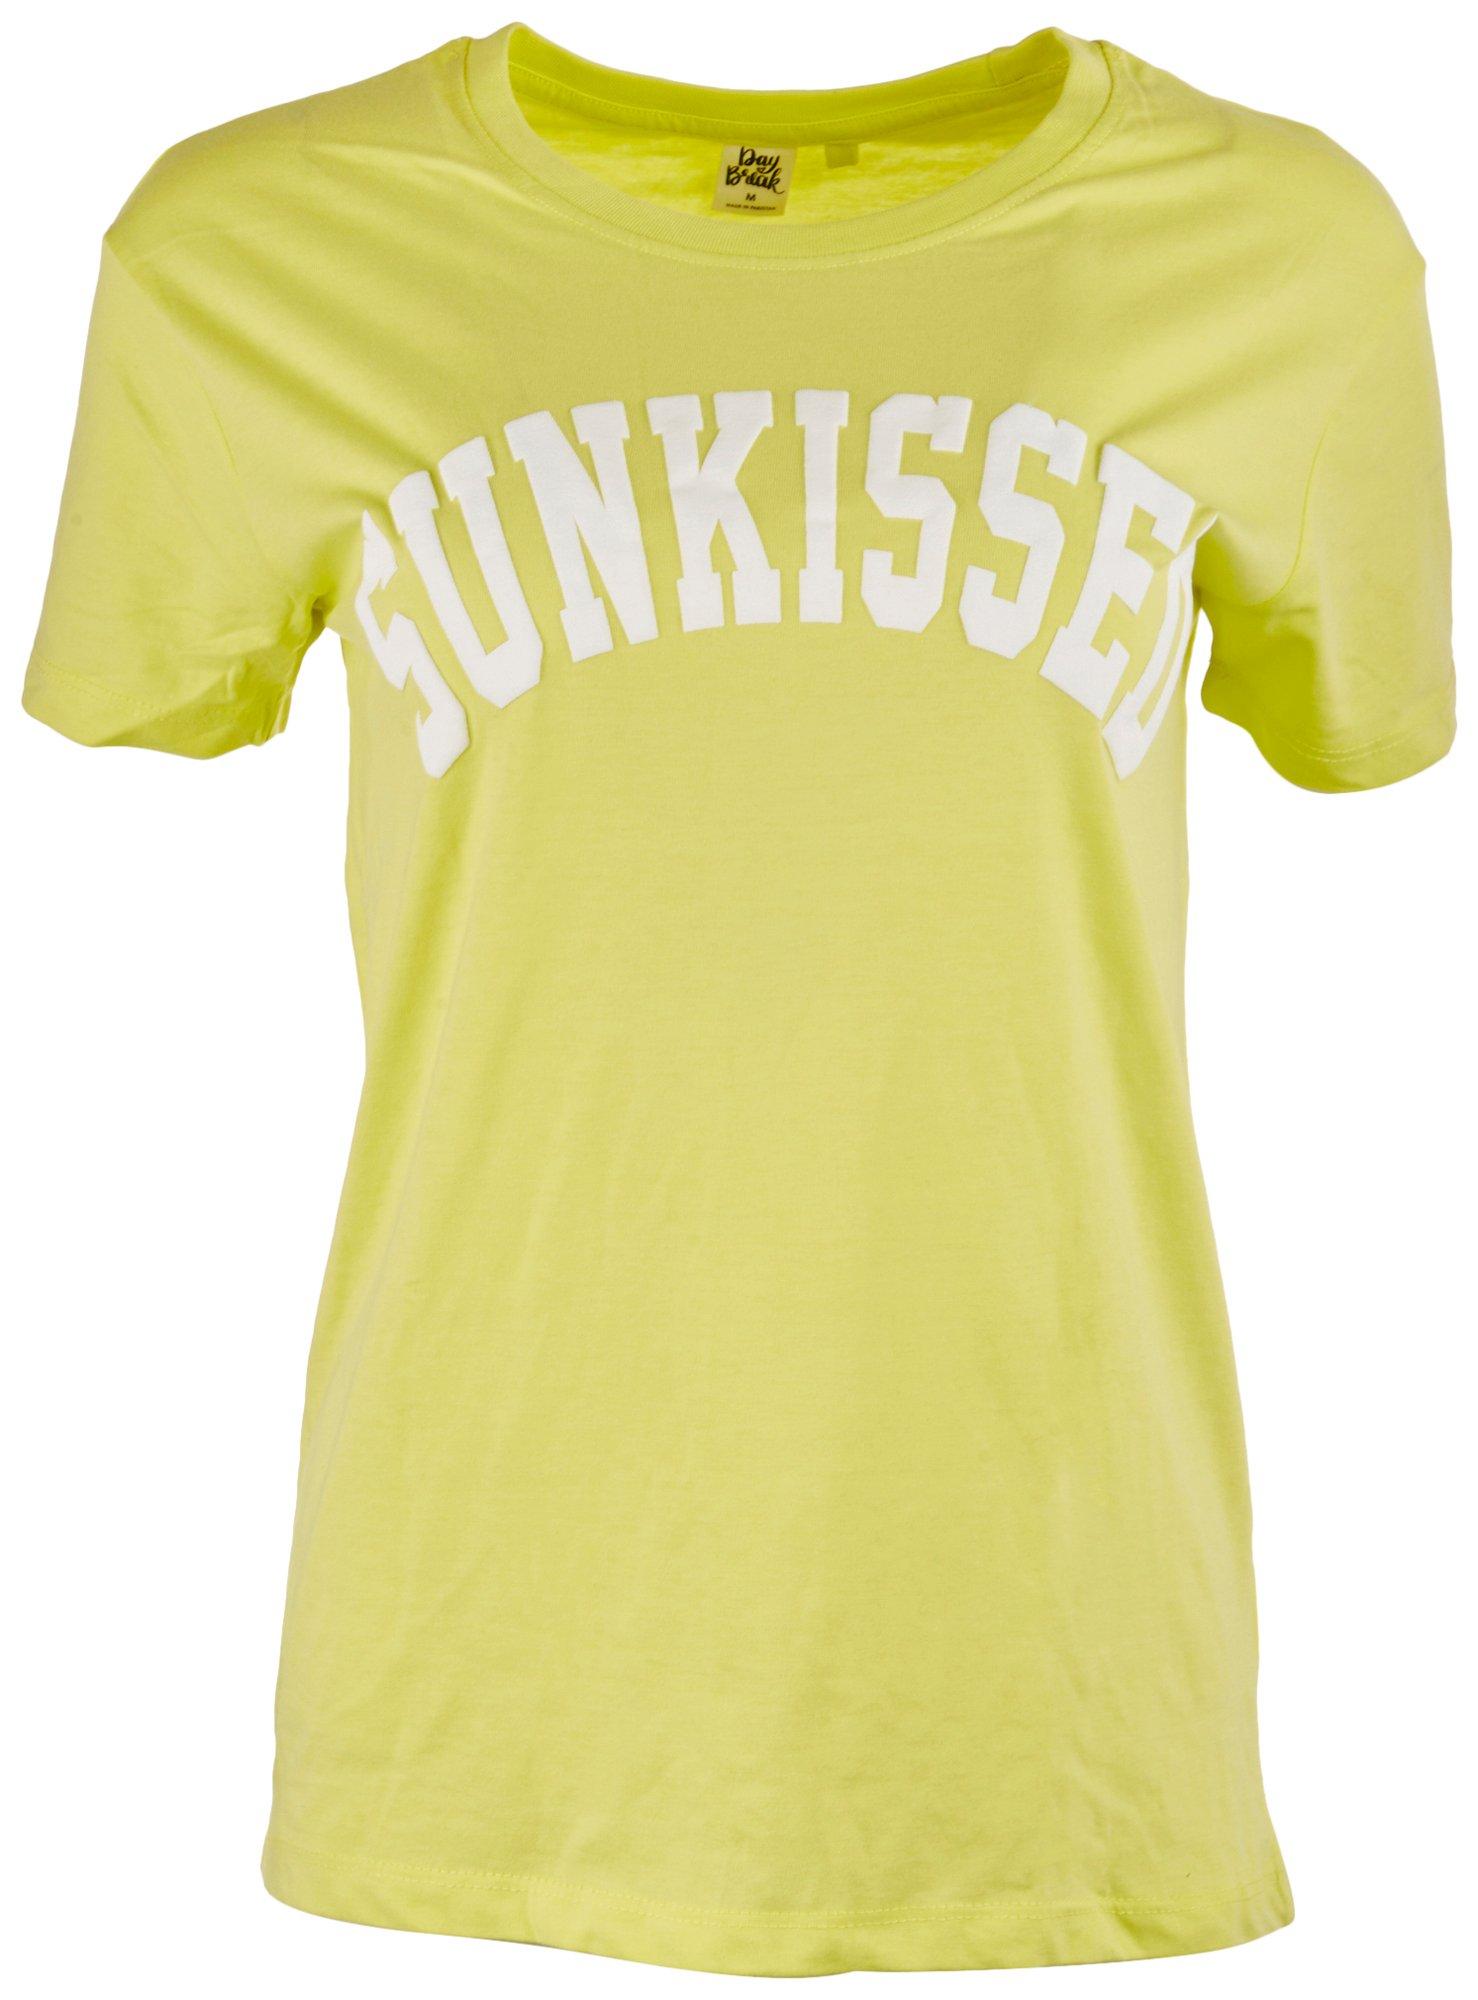 Day Break Juniors Sunkissed T-shirt